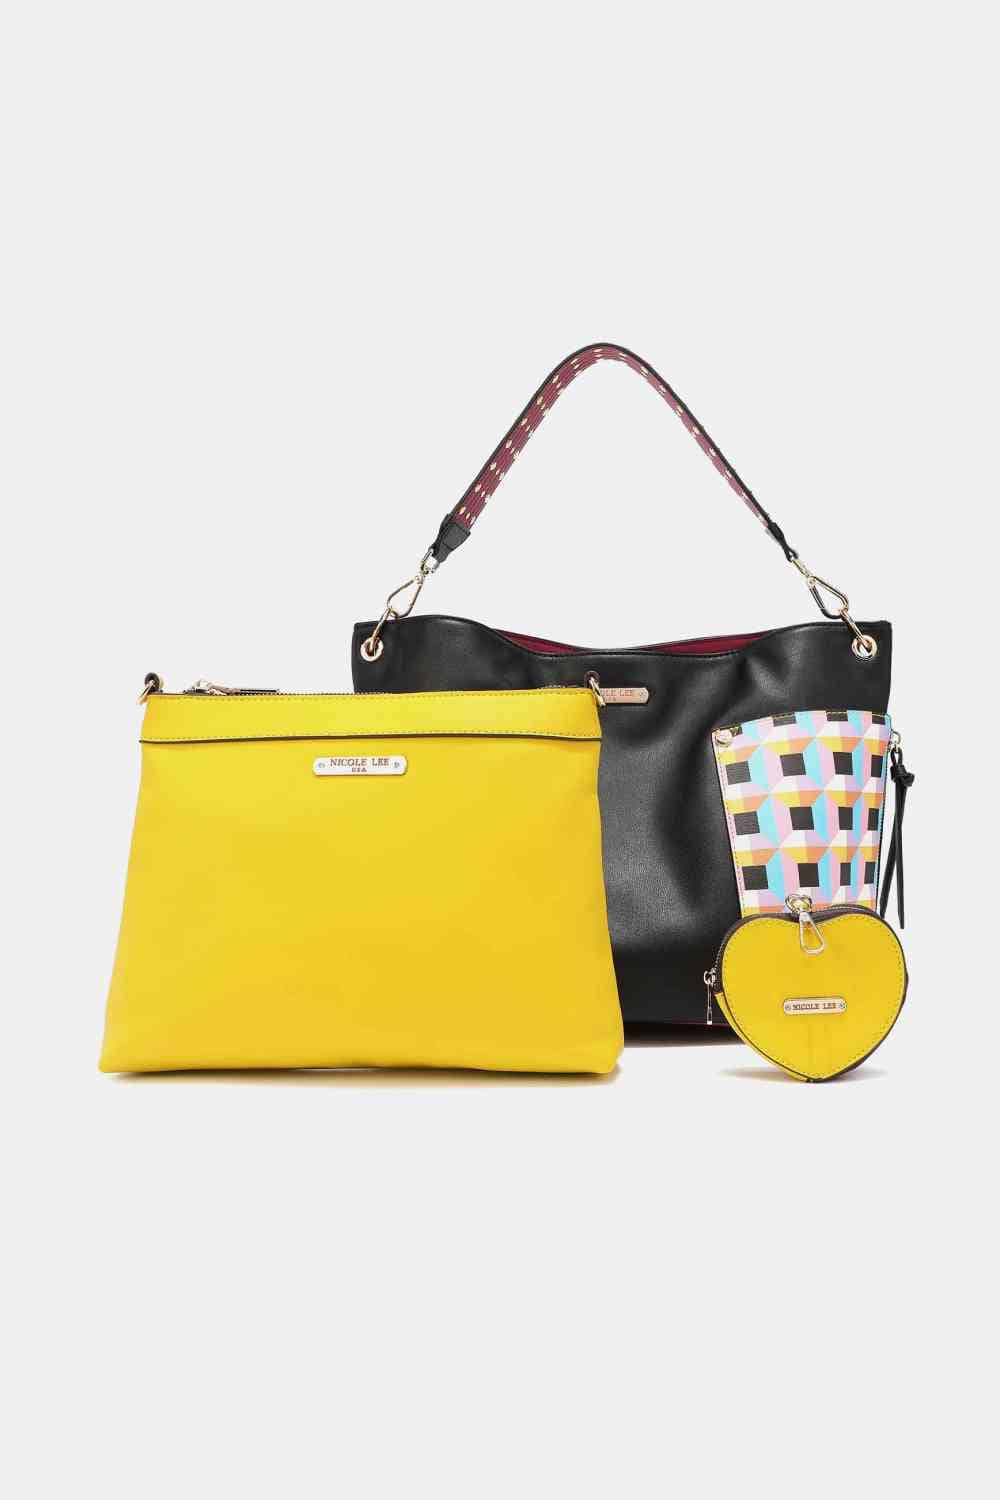 Nicole Lee USA Quihn 3-Piece Handbag Set Black / One Size